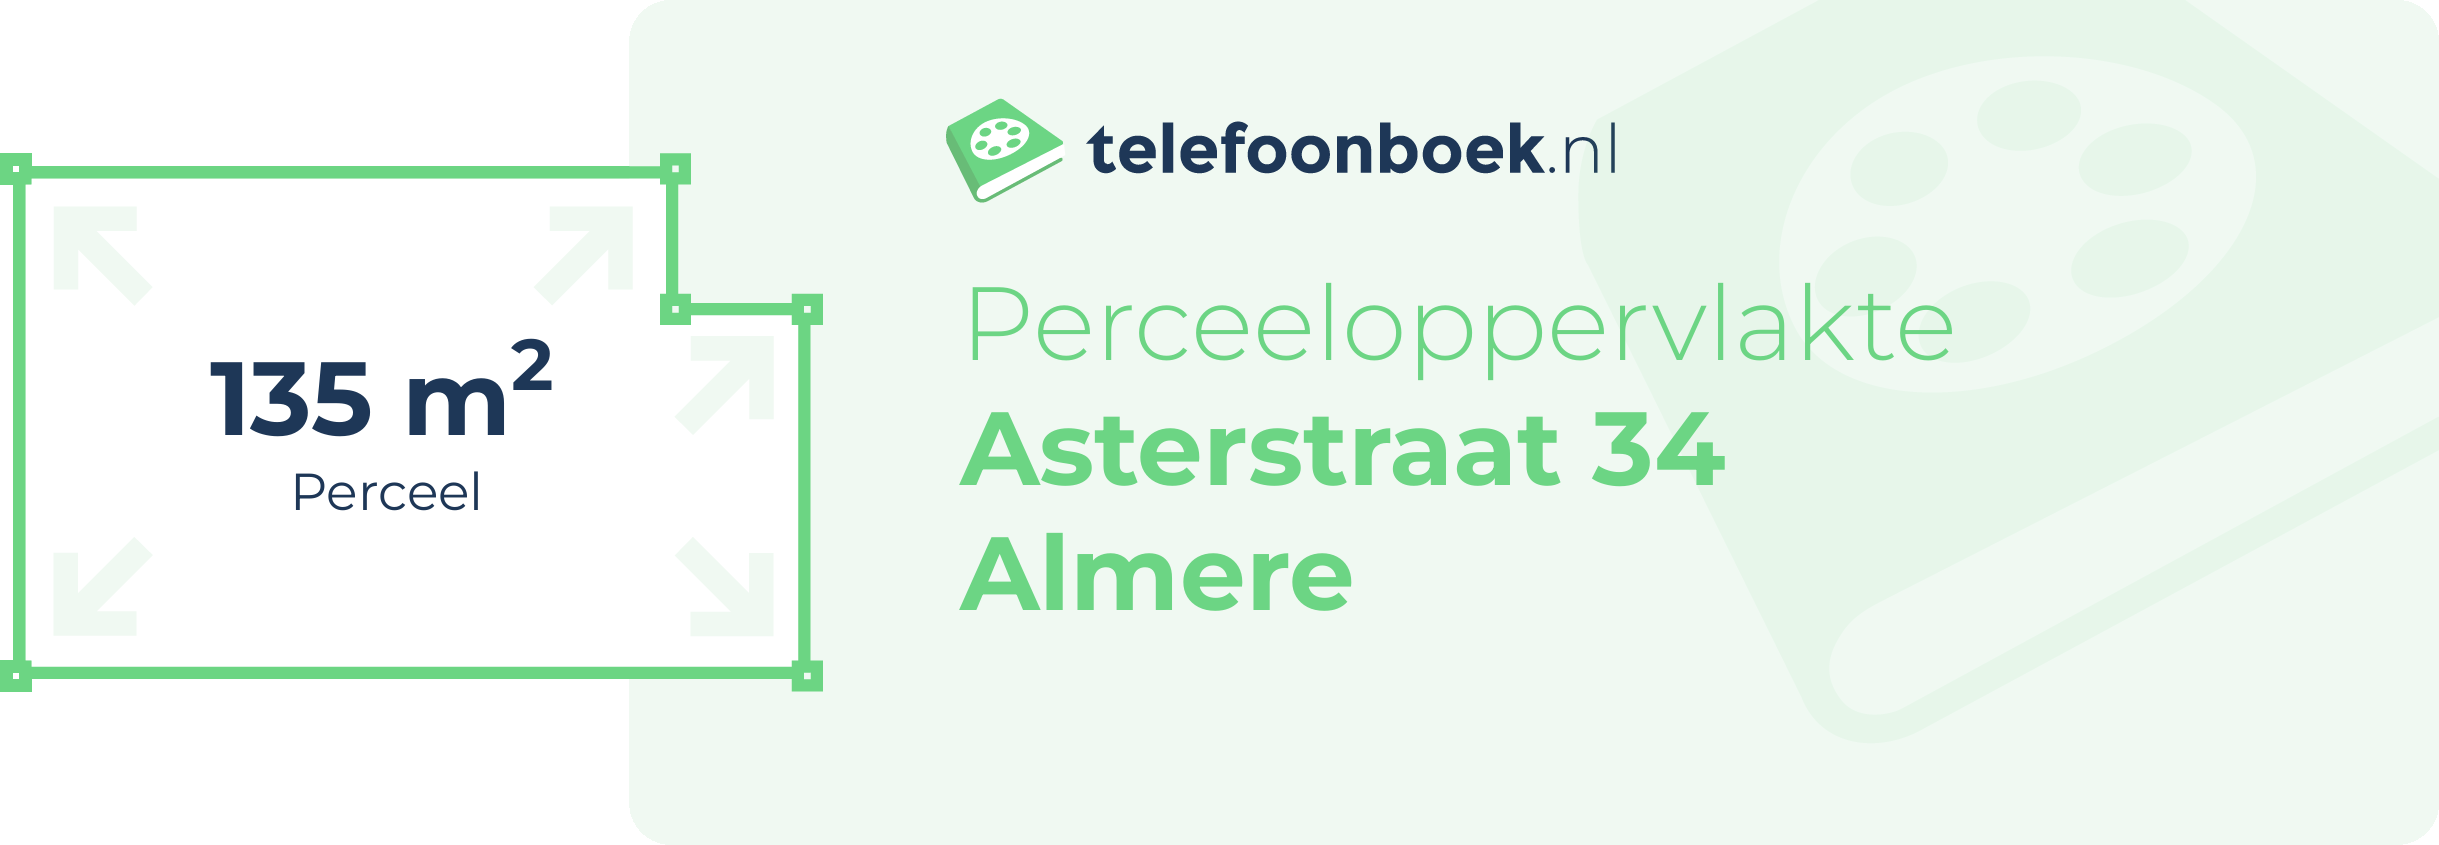 Perceeloppervlakte Asterstraat 34 Almere